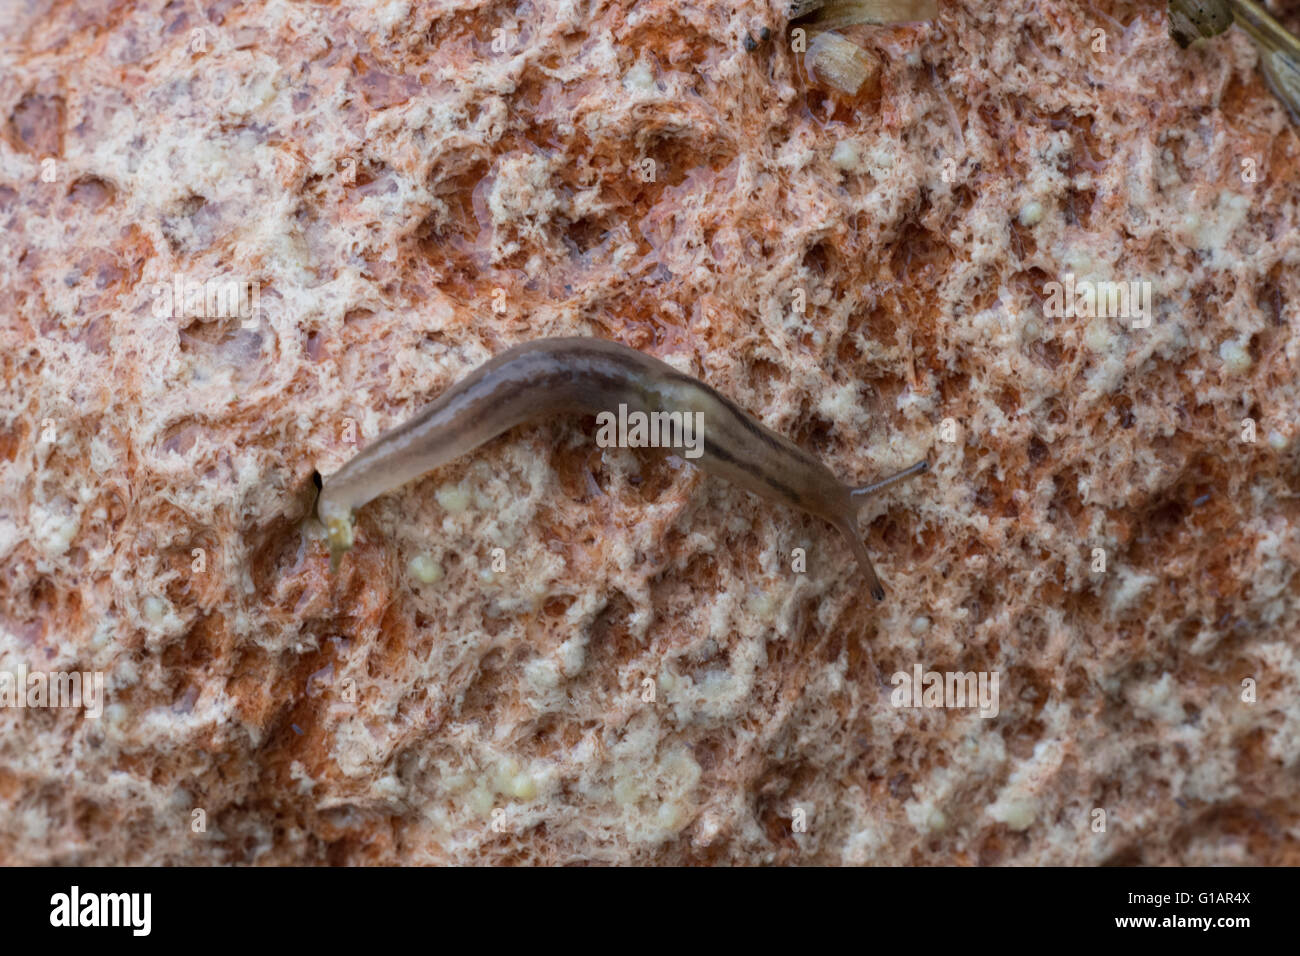 Greenhouse Slug (Ambigolimax valentianus) Stock Photo